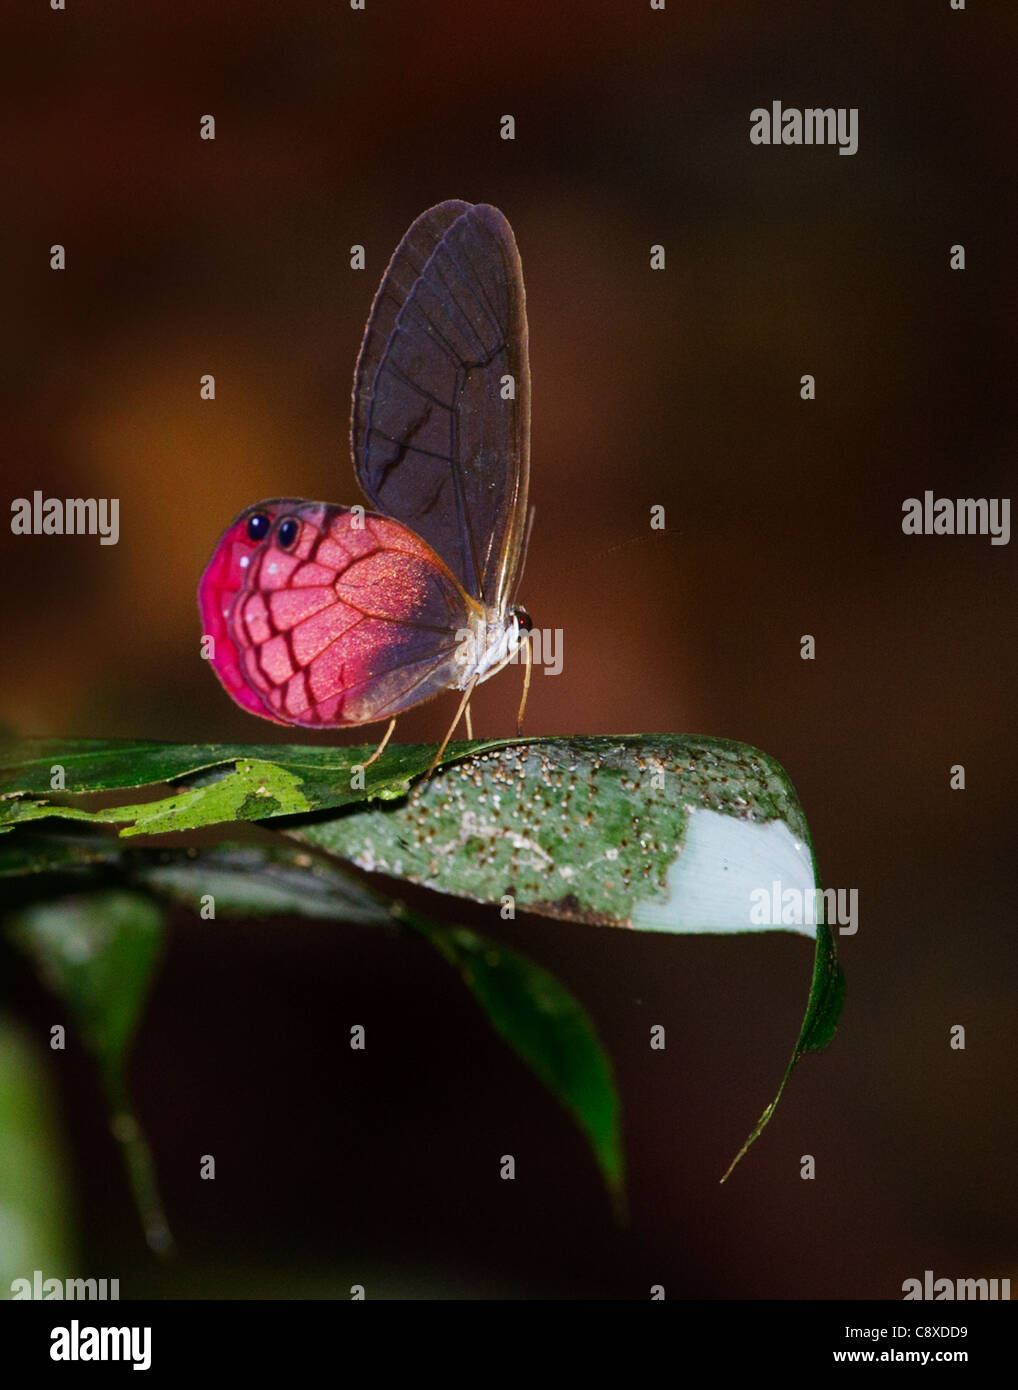 Blush Butterfly Sp. Amazon River Basin Peru Stock Photo